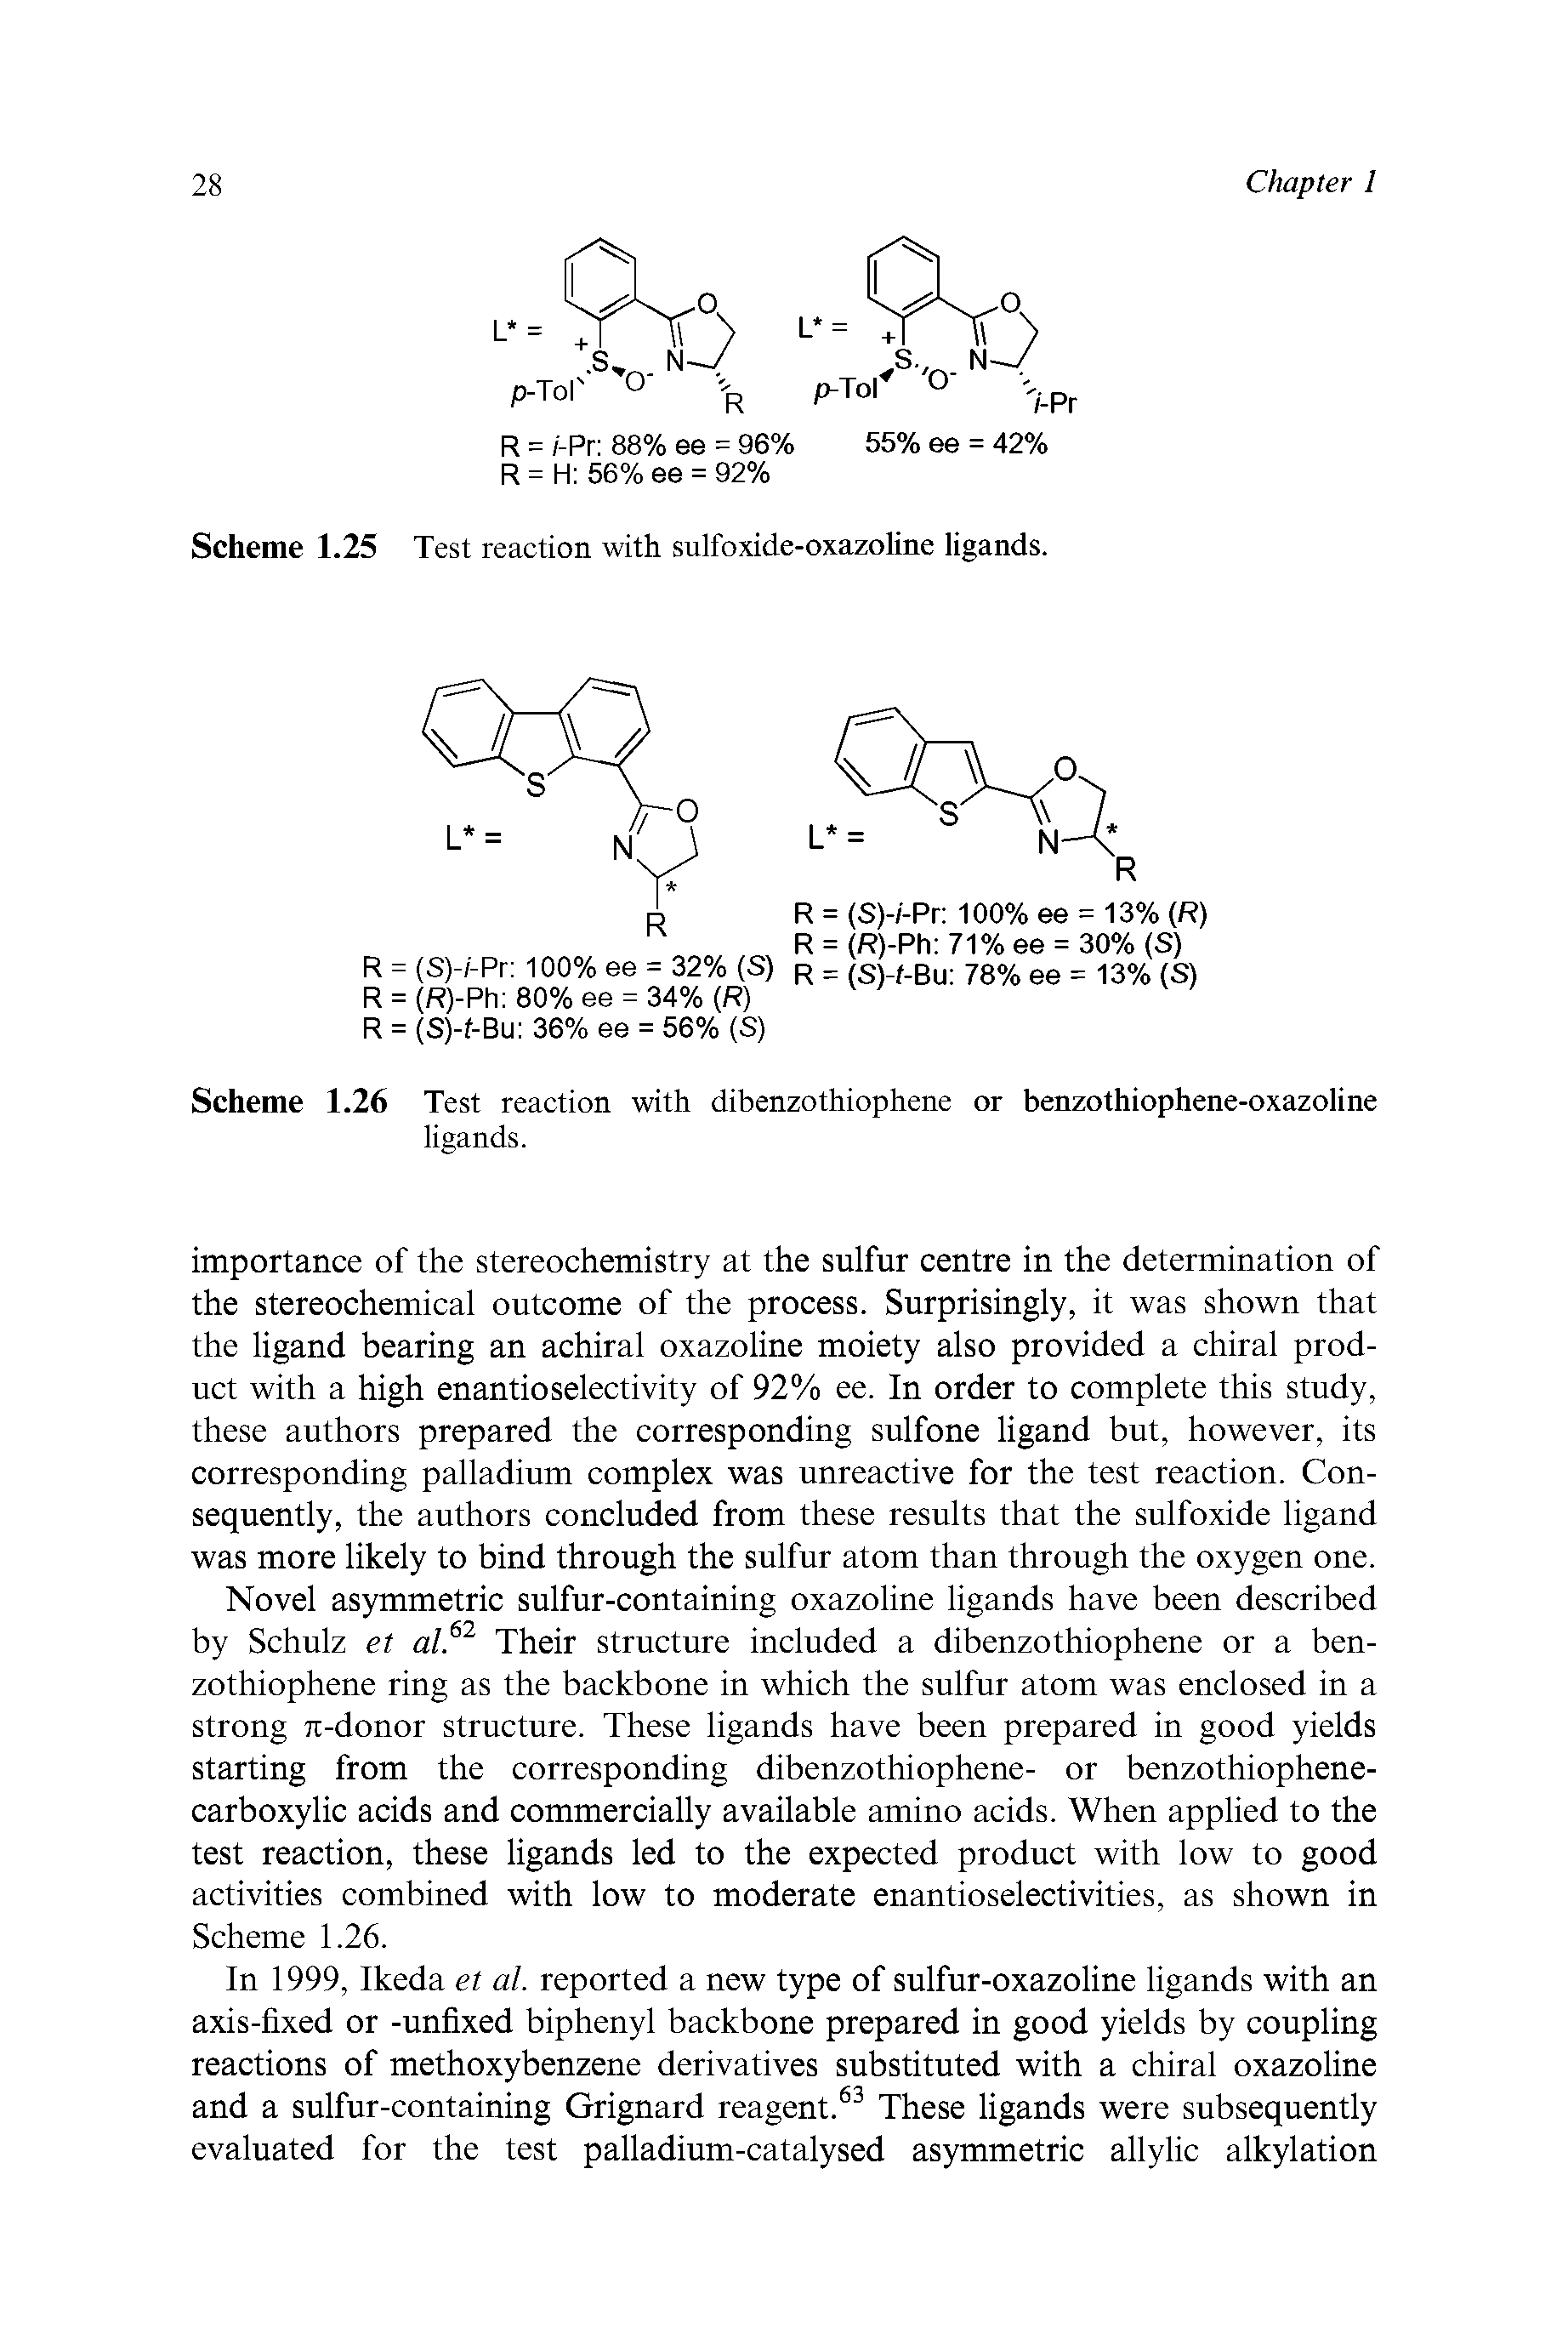 Scheme 1.25 Test reaction with sulfoxide-oxazoline ligands.